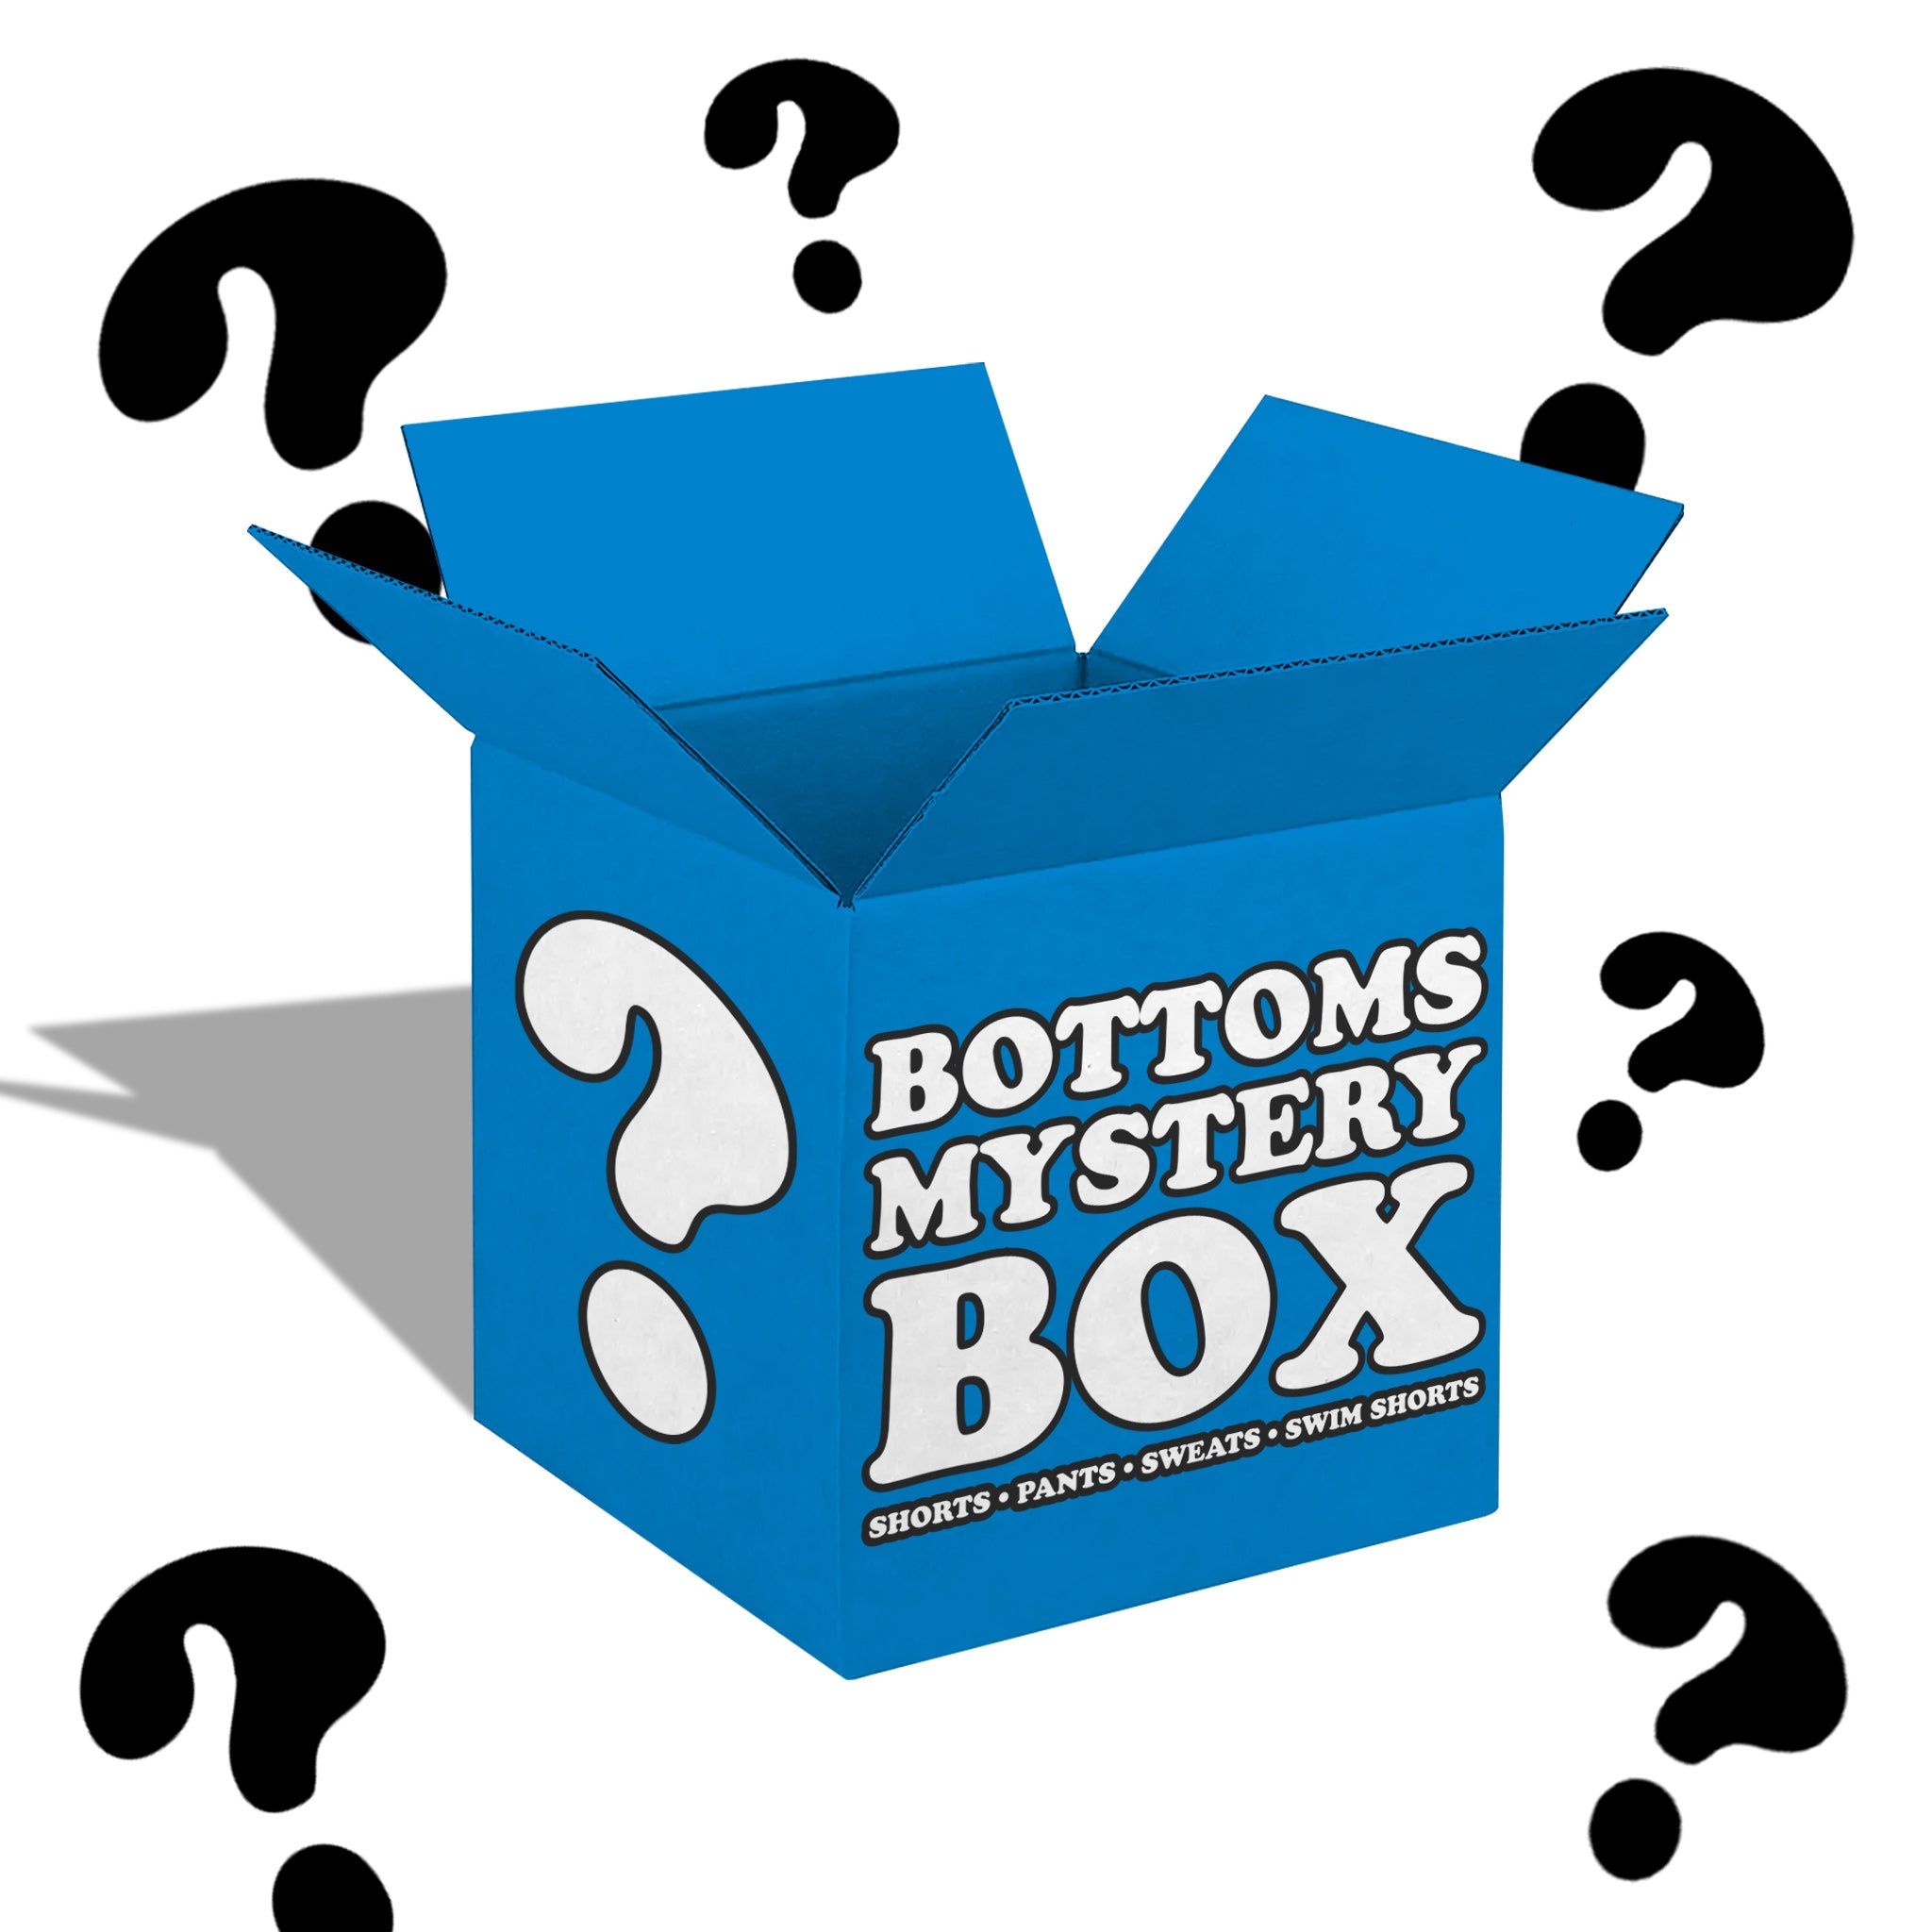 RIPNDIP Bottoms Mystery Box (Shorts and Pants)